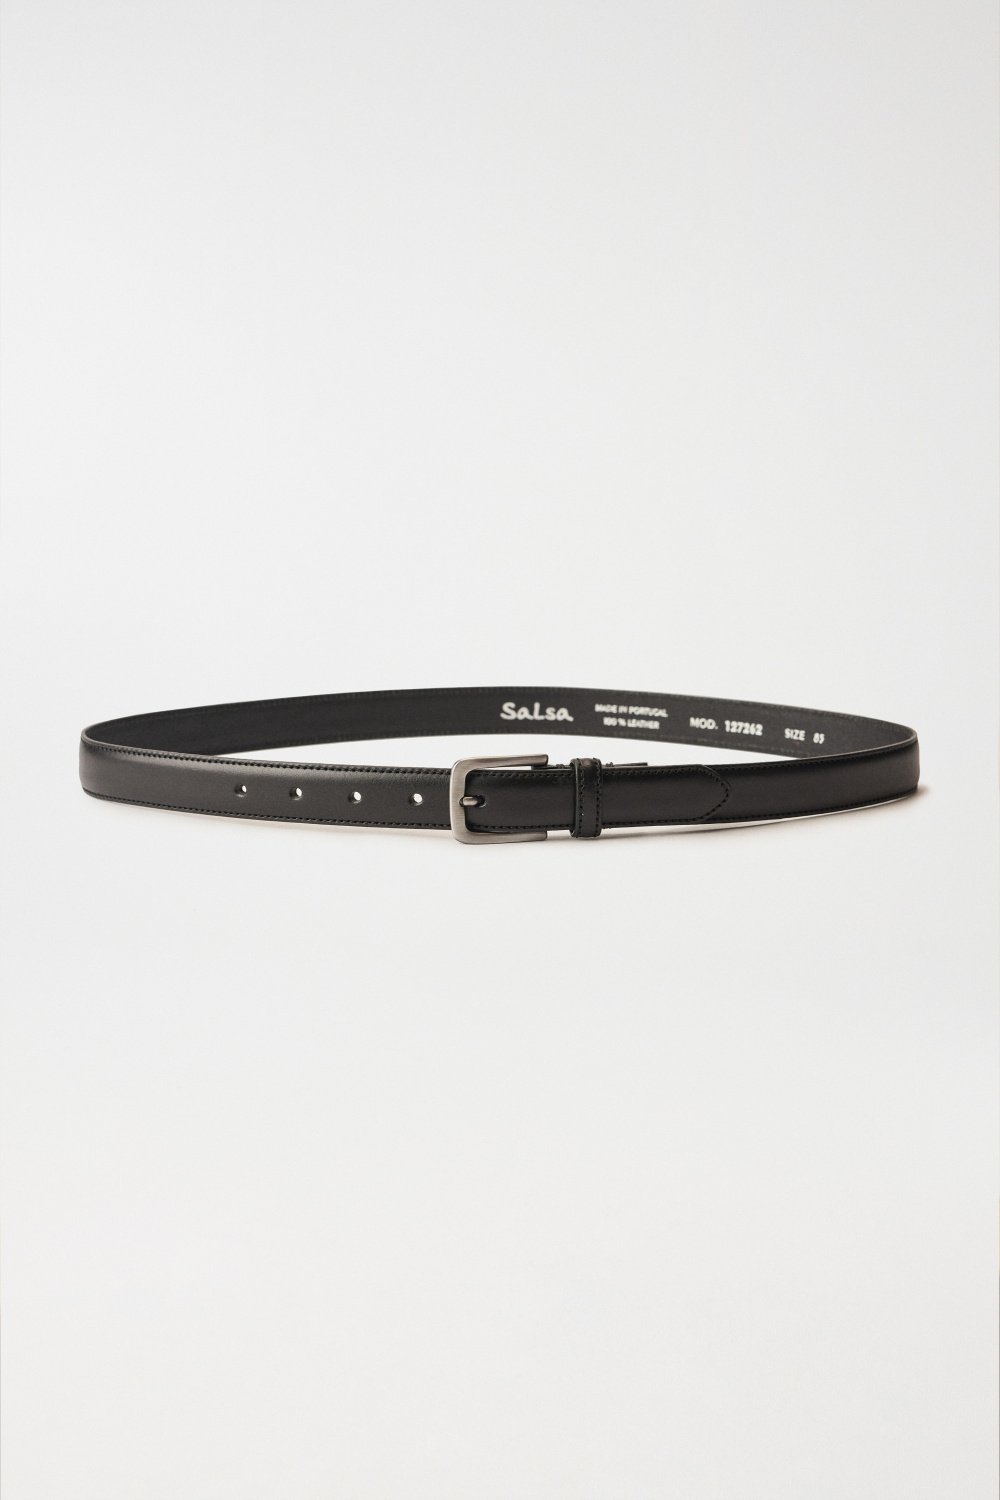 Black leather belt - Salsa